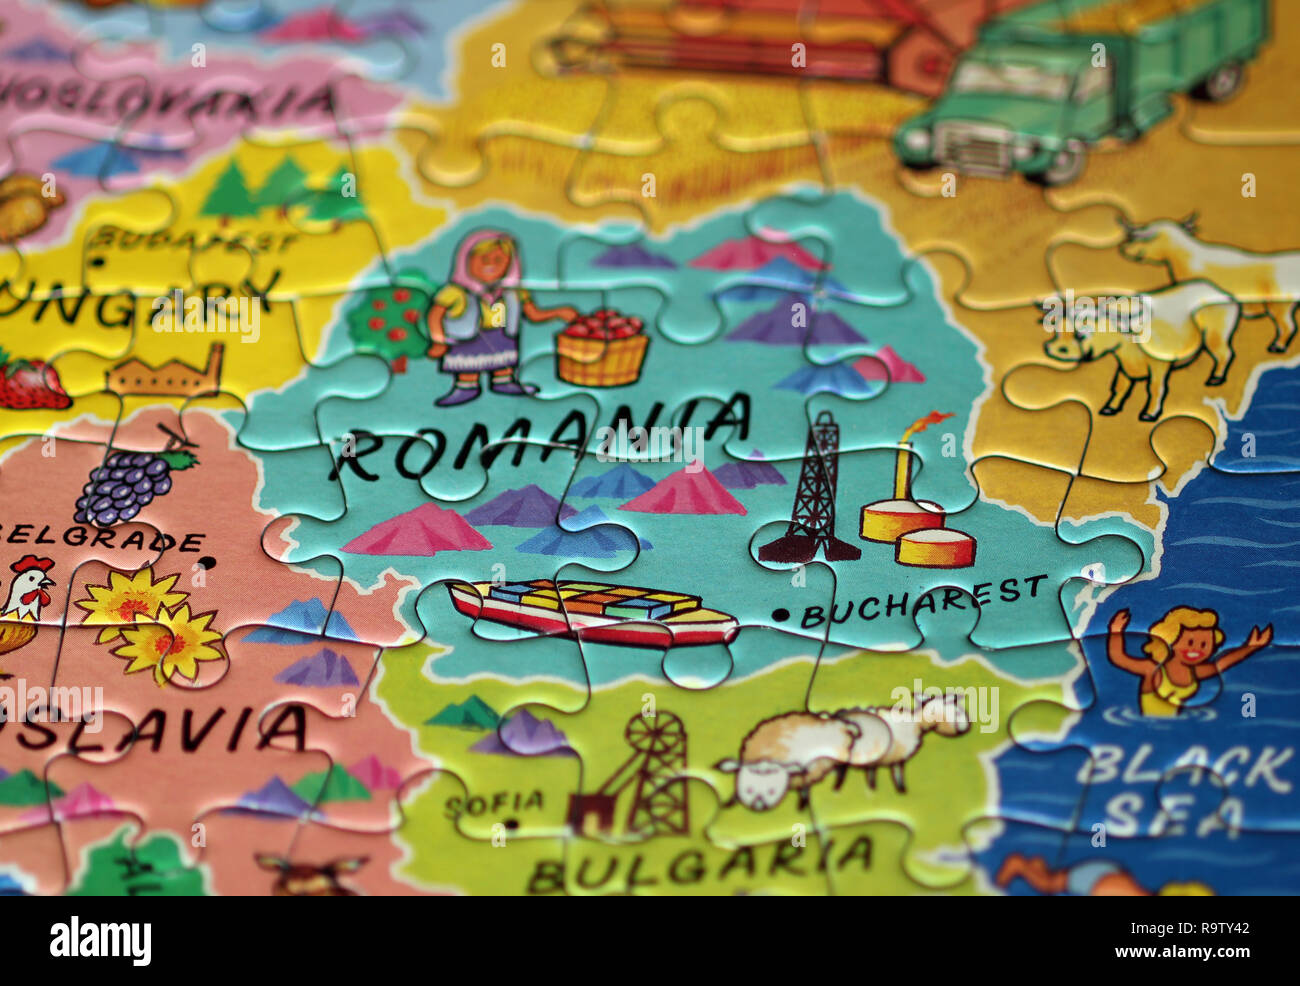 Romania jigsaw puzzle map Stock Photo - Alamy